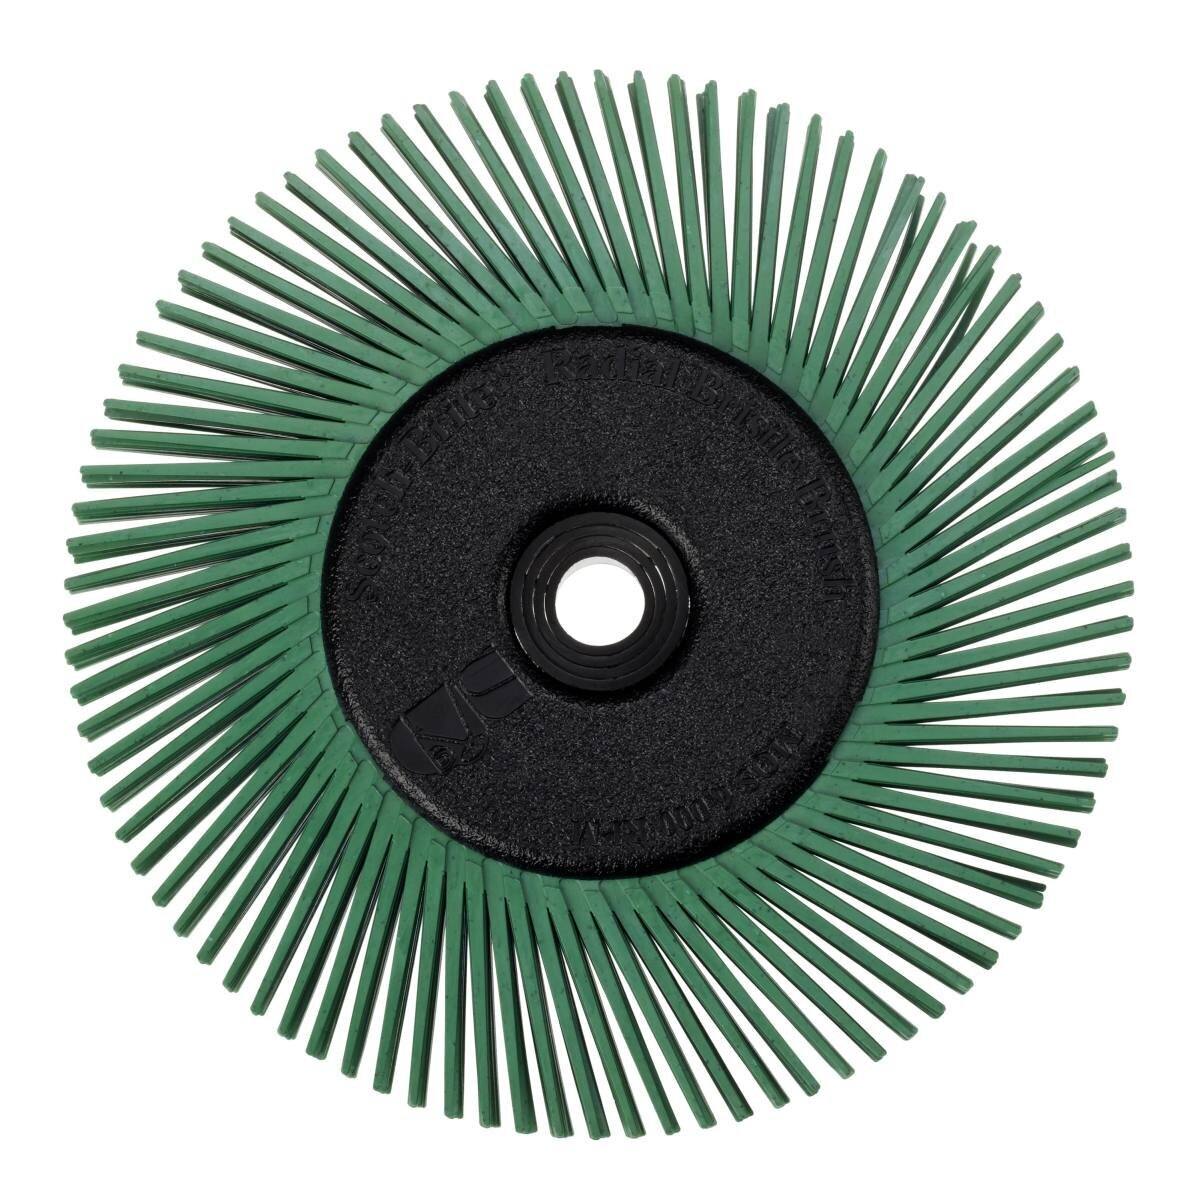 3M Scotch-Brite Radial Bristle Disc BB-ZB avec bride, vert, 152,4 mm, P50, type A #27605